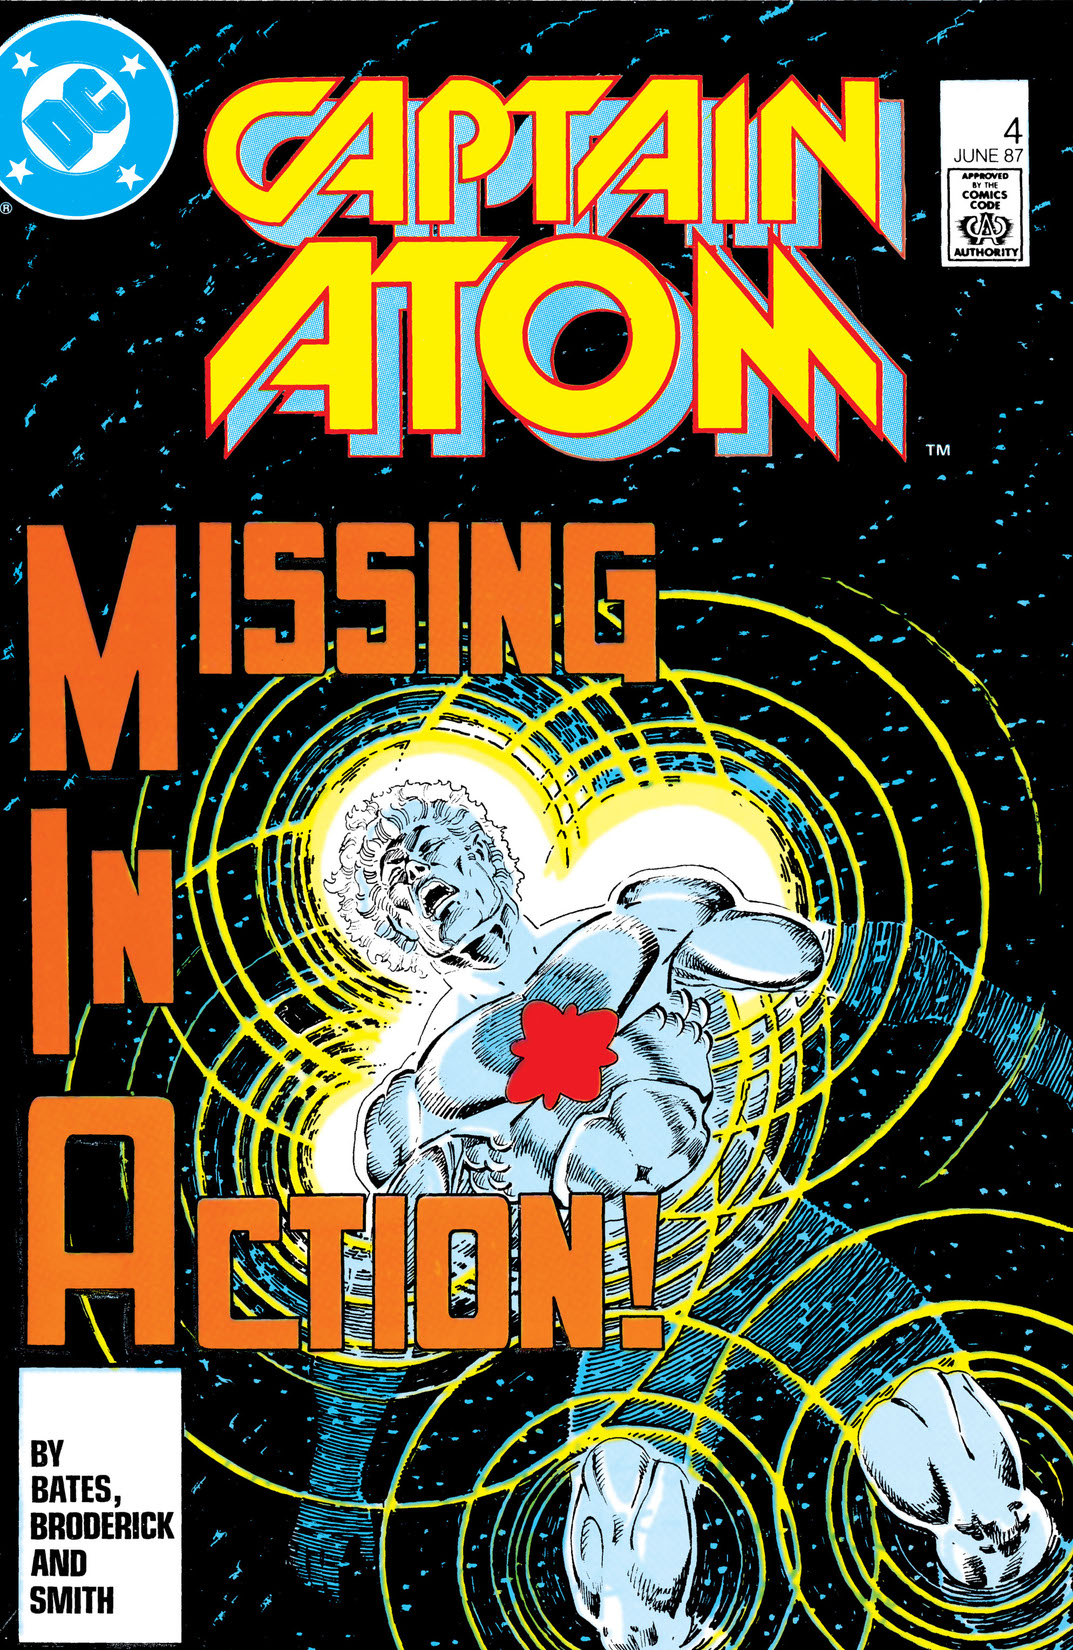 Captain Atom (1986-1992) #4 preview images